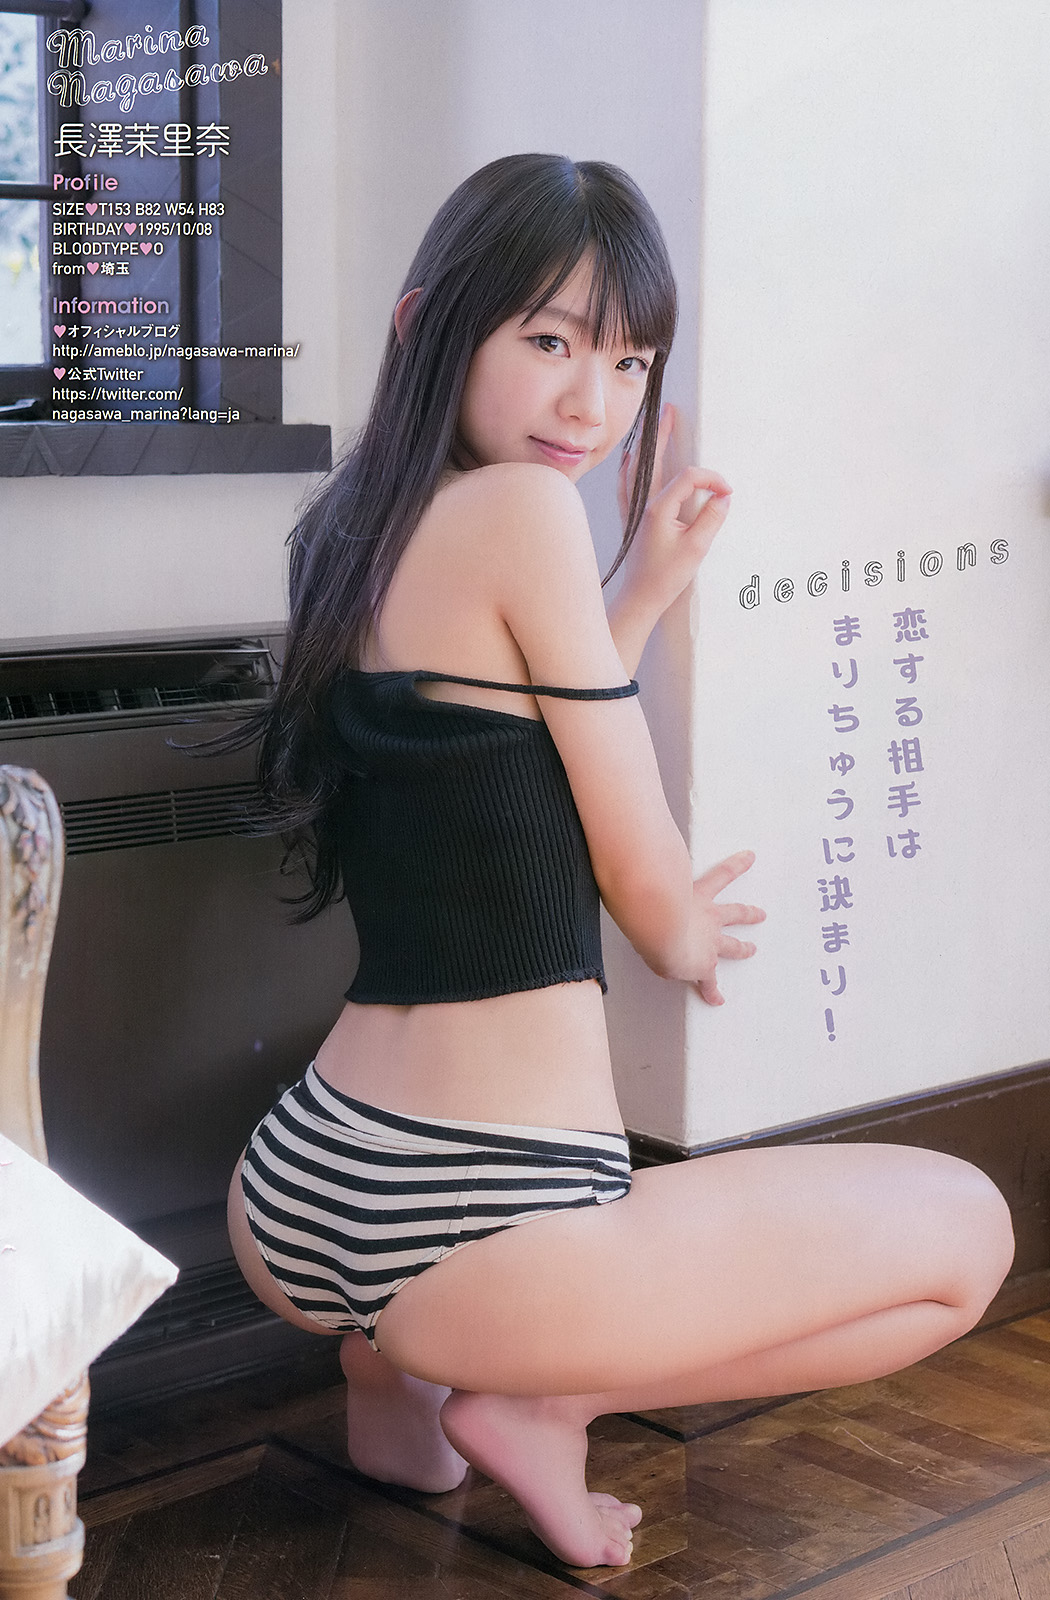 Japanese-gravure-model-Marina-Nagasawa-www.ohfree.net-007 Japanese pop singer, idol and gravure model Marina Nagasawa 長澤茉里奈 leaked nude photos  